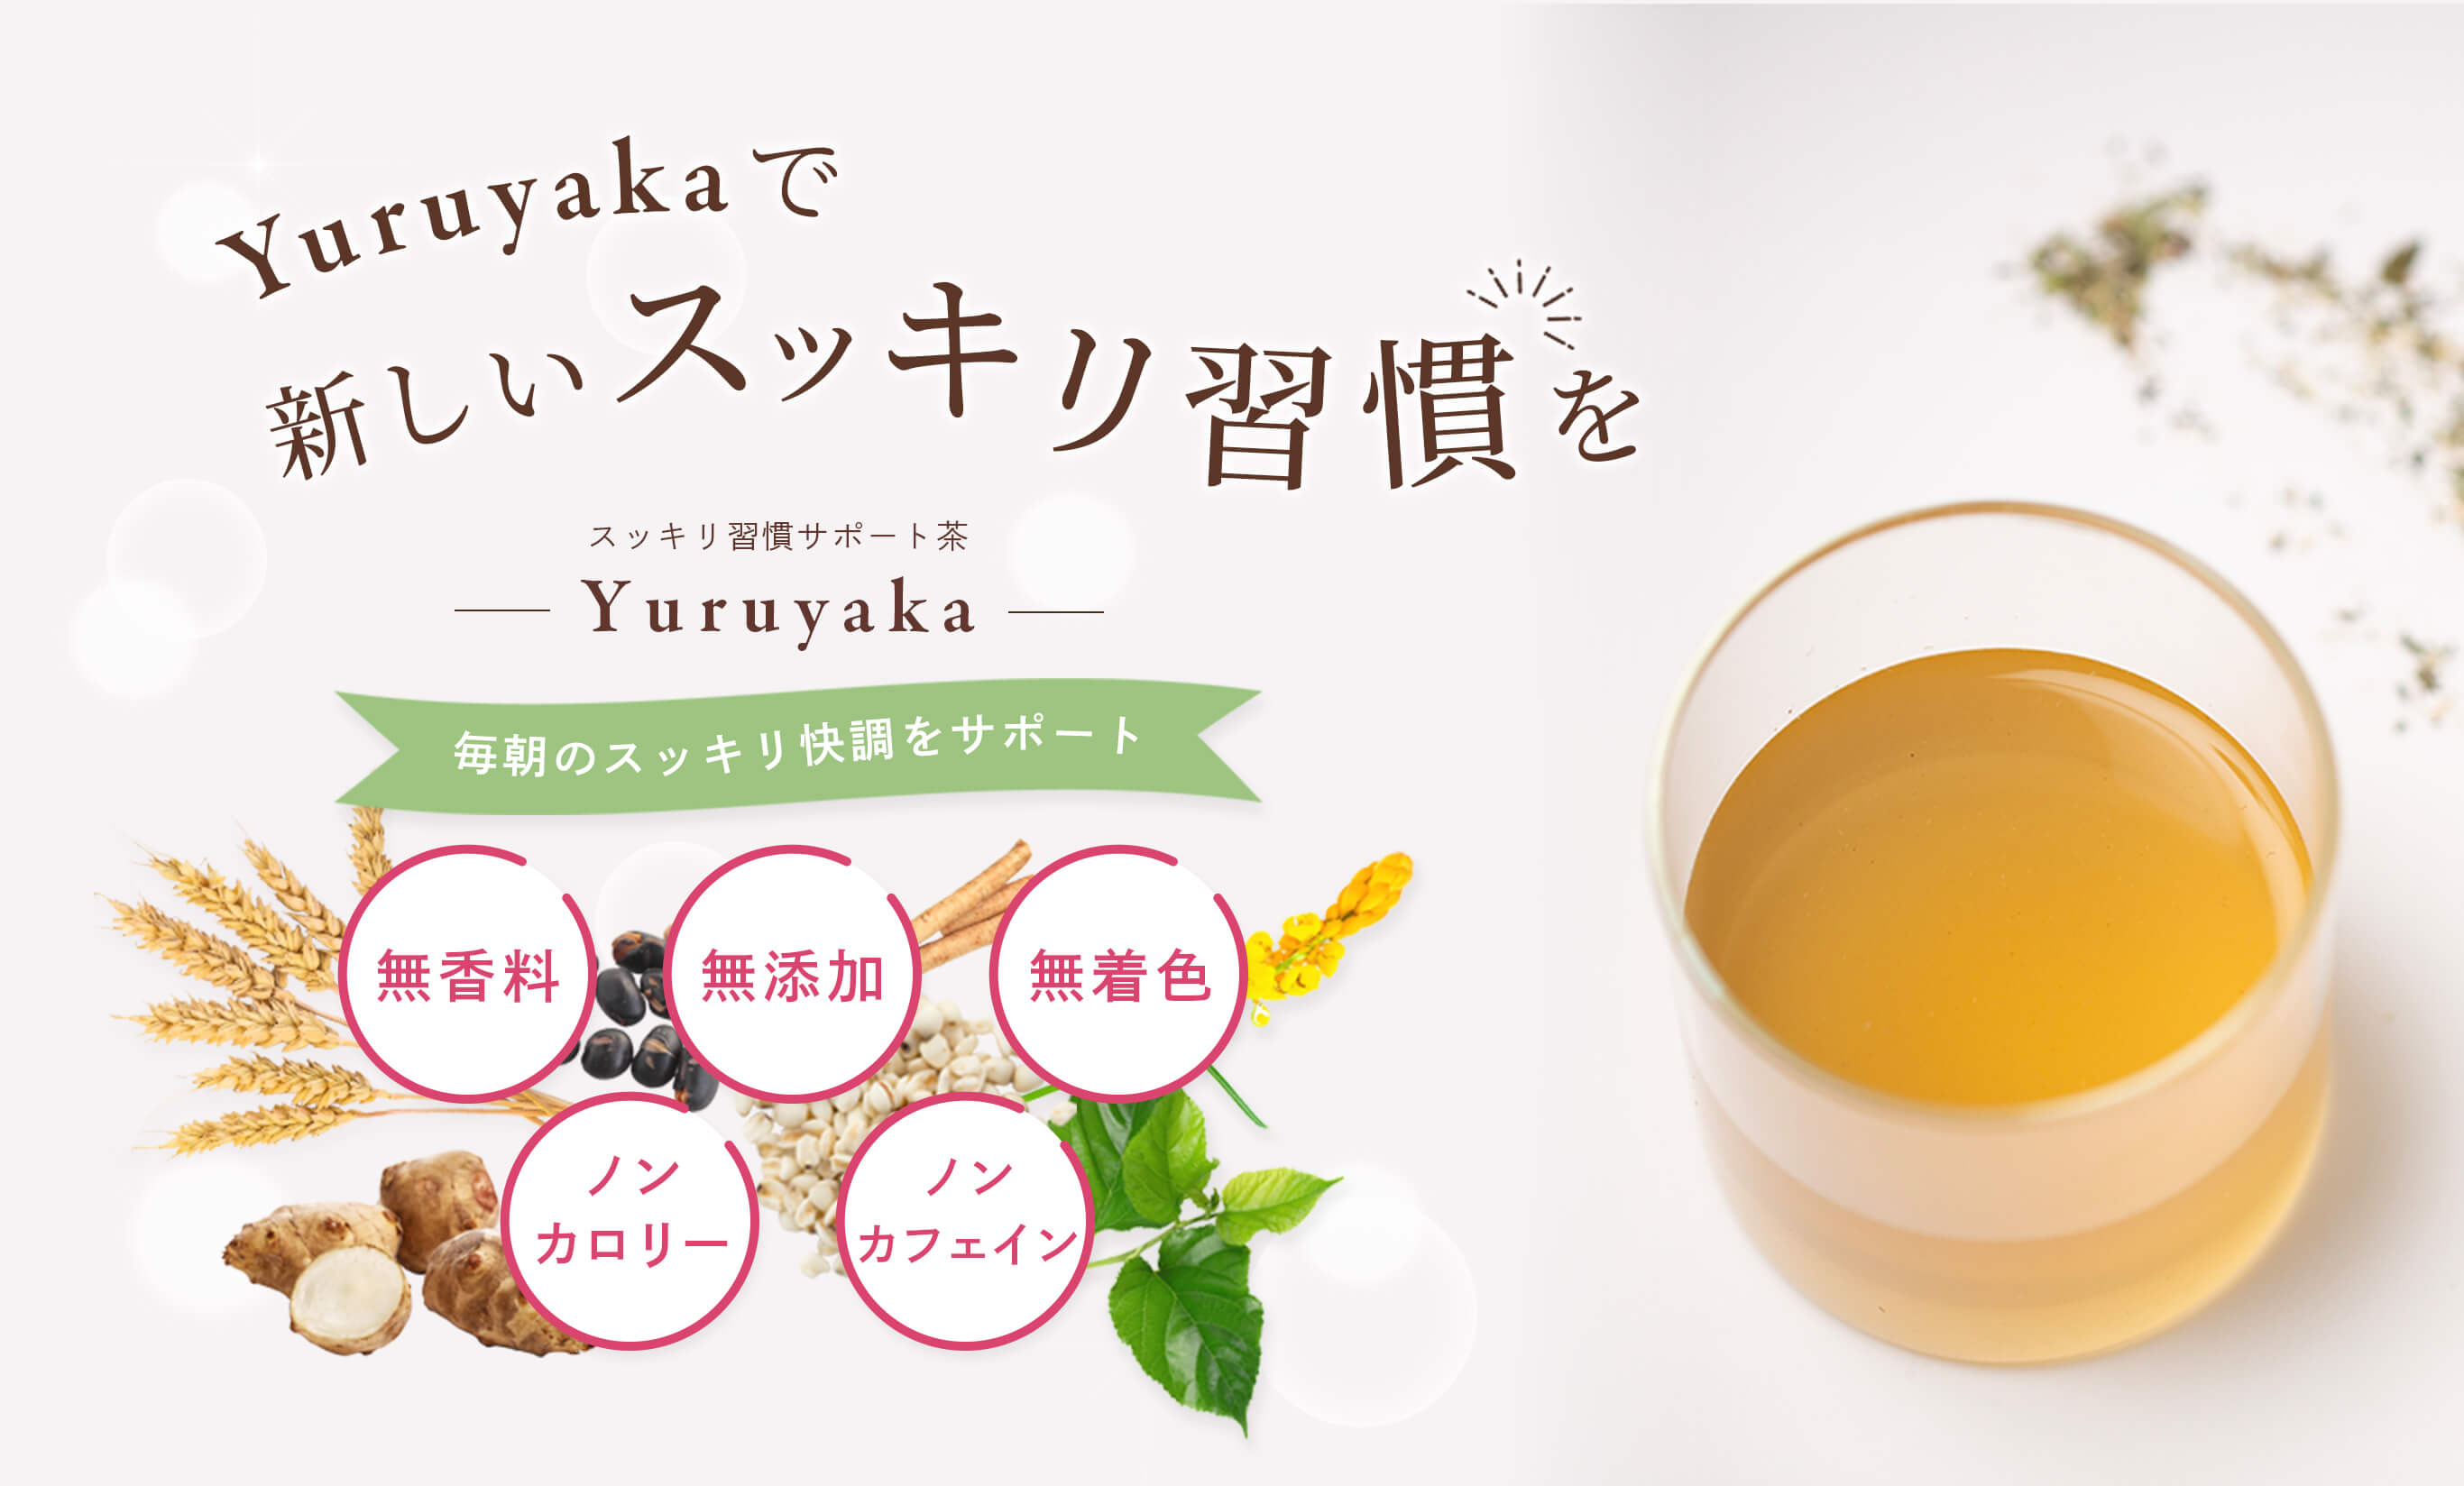 Yuruyakaで新しいスッキリ習慣を 毎朝のスッキリ快調をサポート スッキリ習慣サポート茶 Yuruyaka